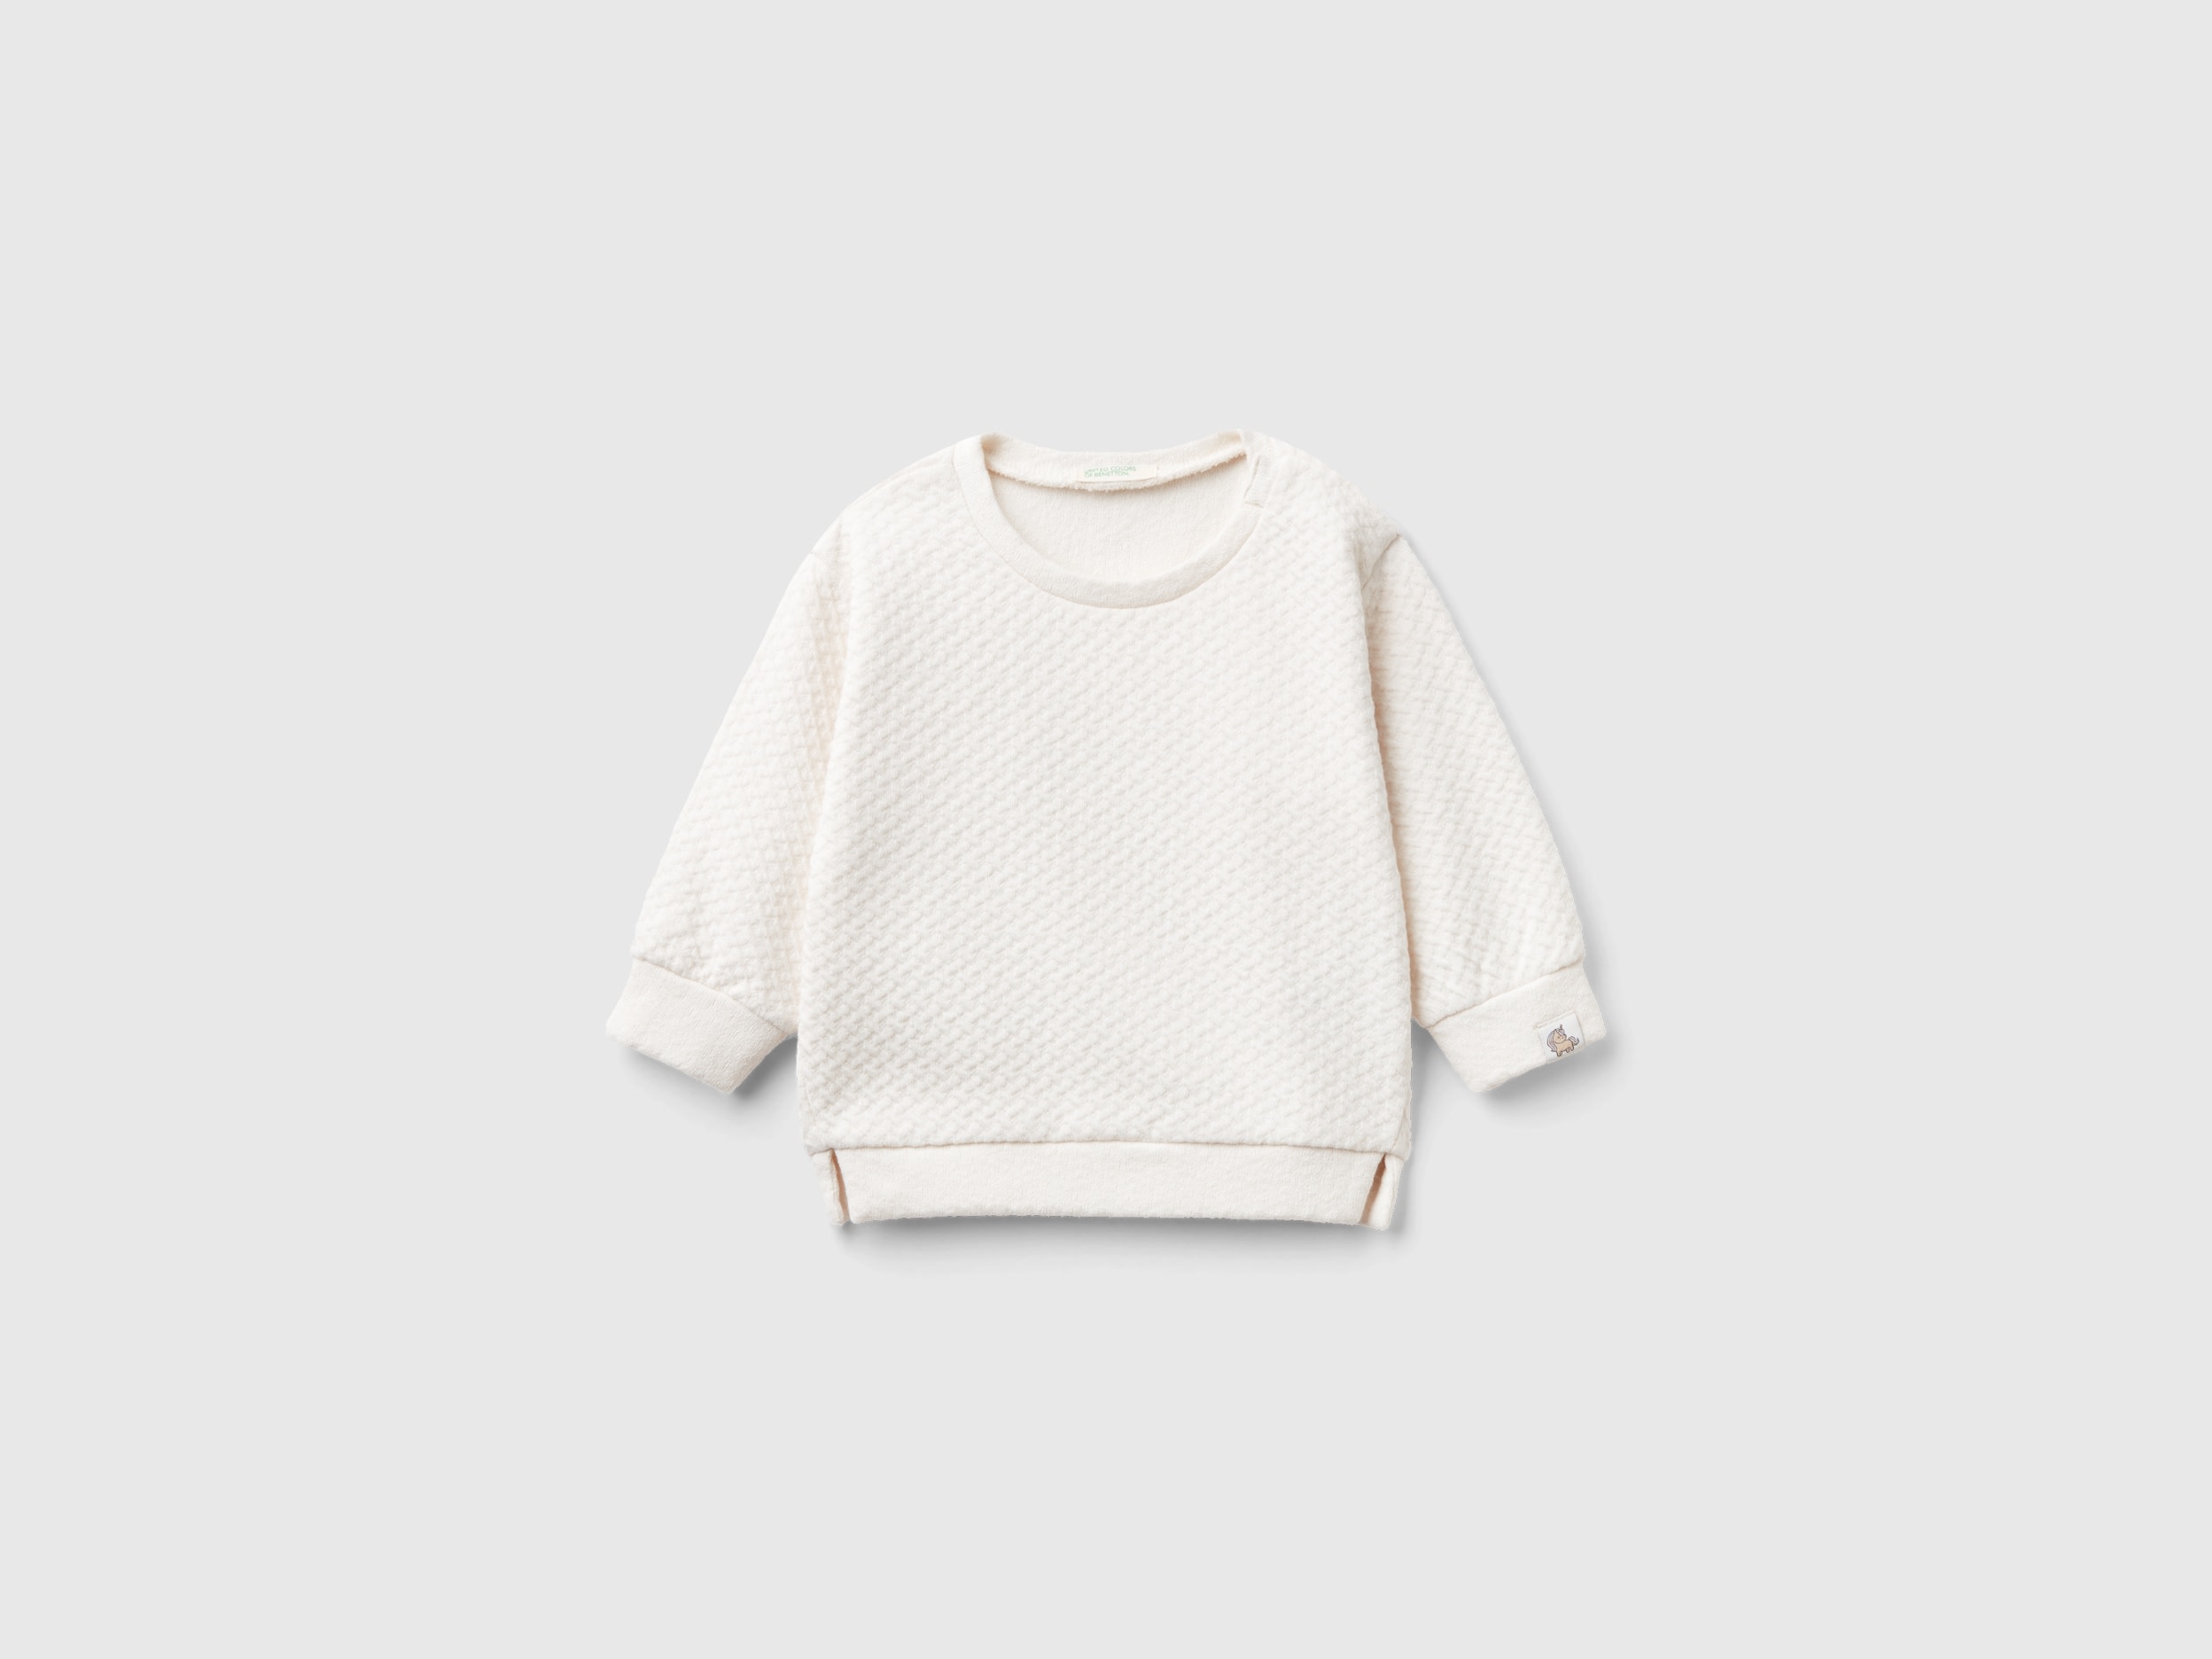 Image of Benetton, Pullover Jacquard Sweatshirt, size 62, Creamy White, Kids